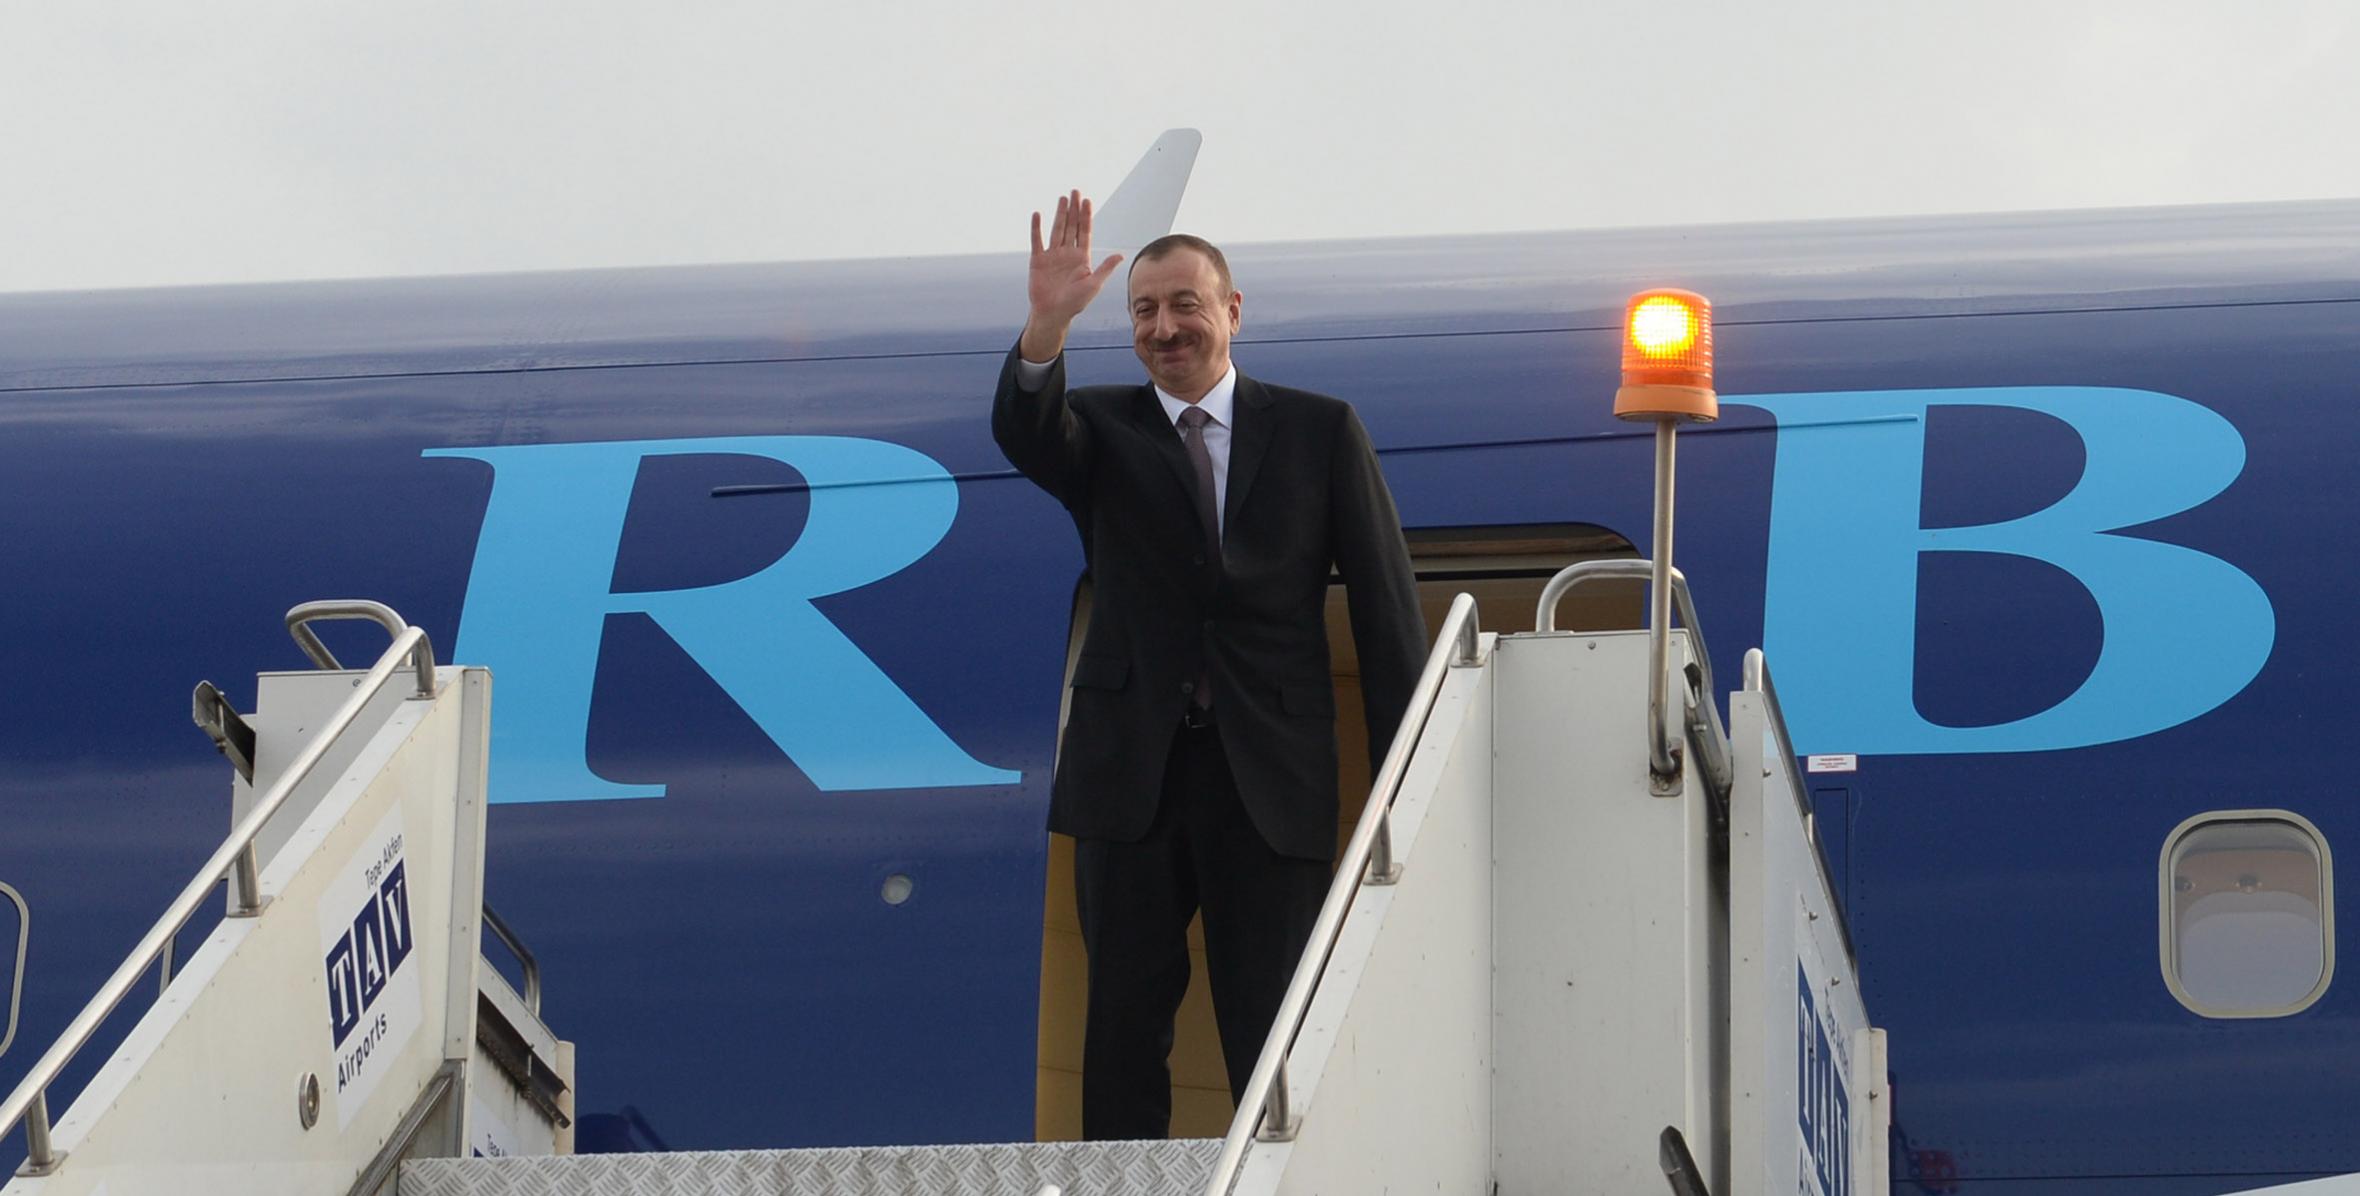 Ilham Aliyev’s working visit to Georgia ended